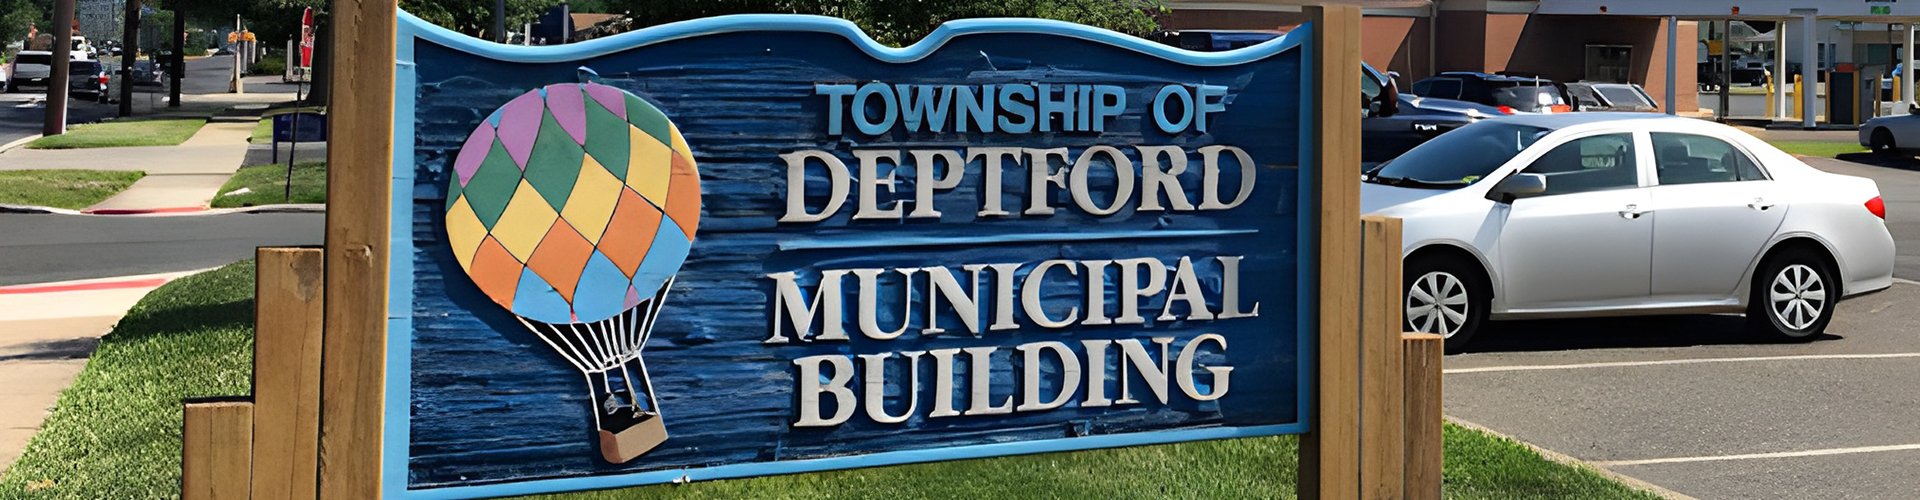 Deptford Township - Municipal